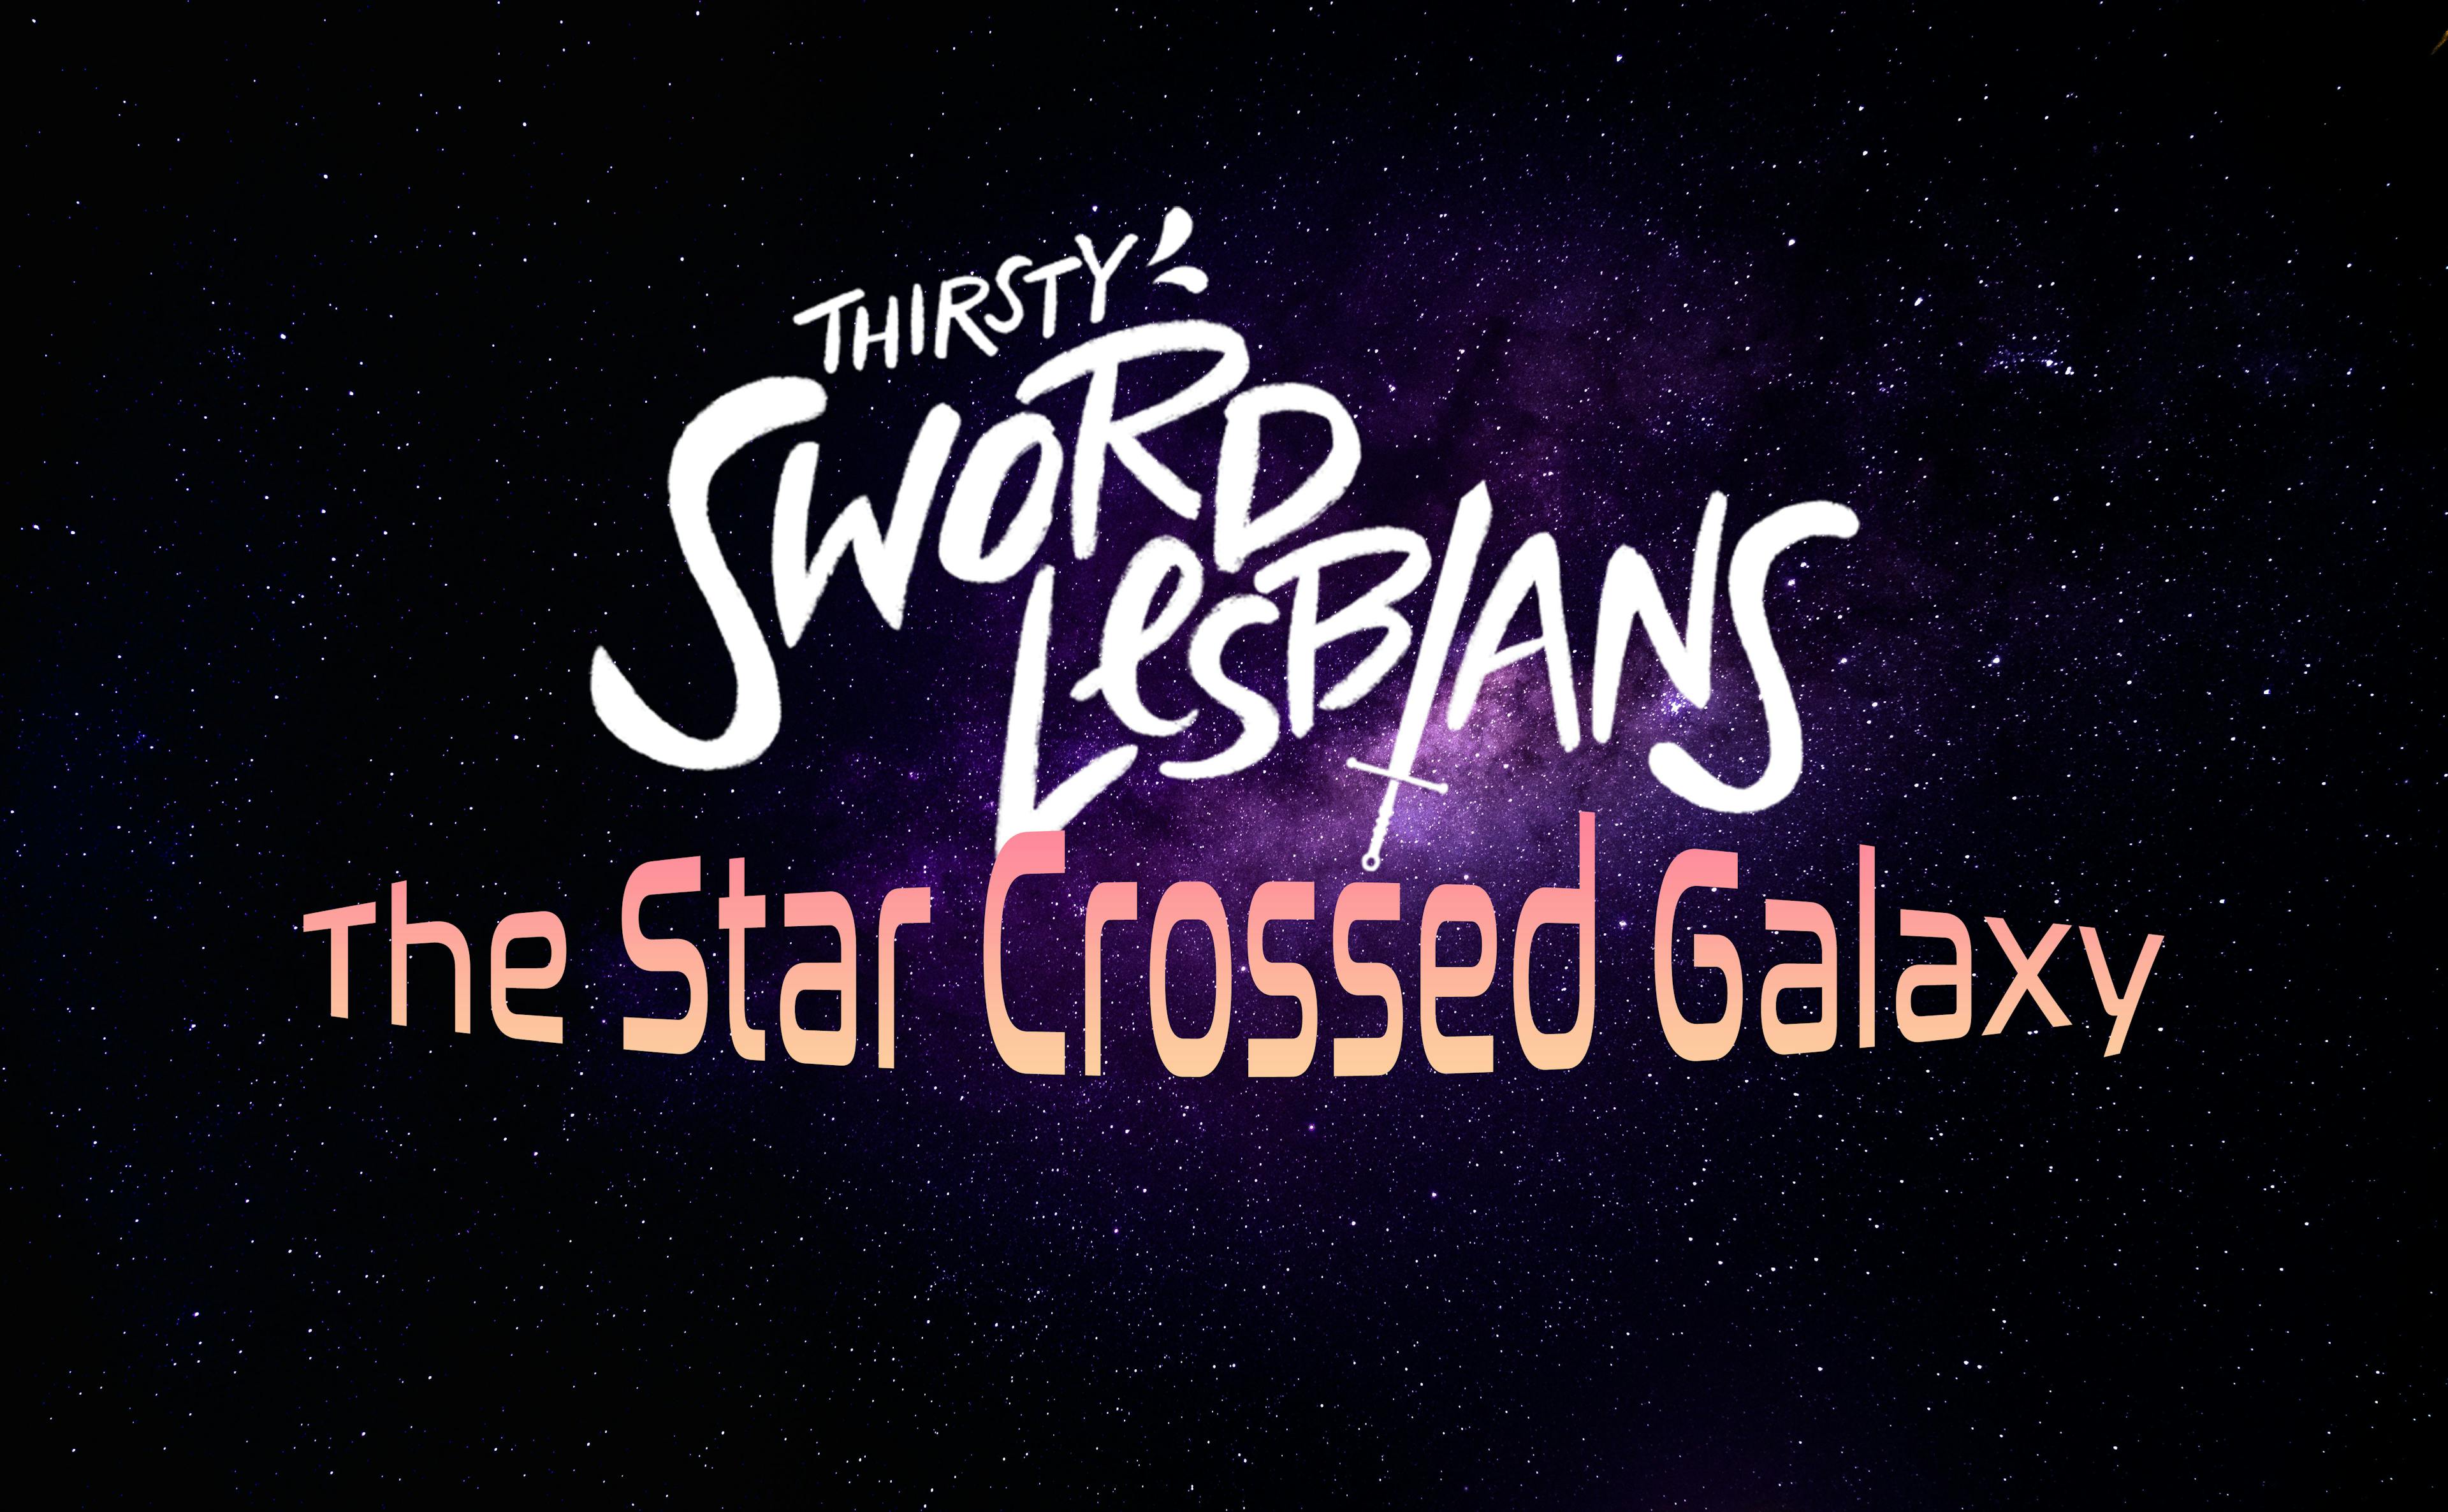 Thirsty Sword Lesbians: The Starcross Galaxy